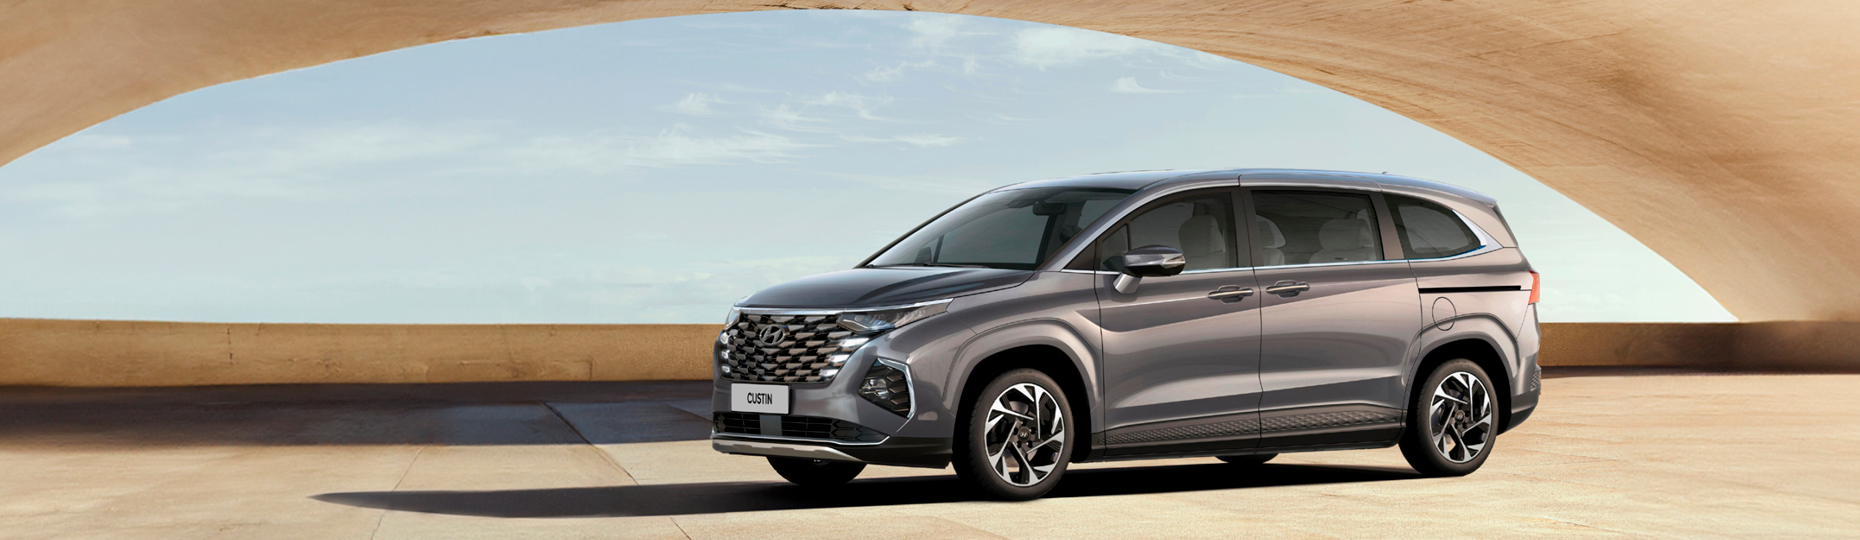 Производительность нового Hyundai Custin - «Hyundai Premium Al-Farabi»